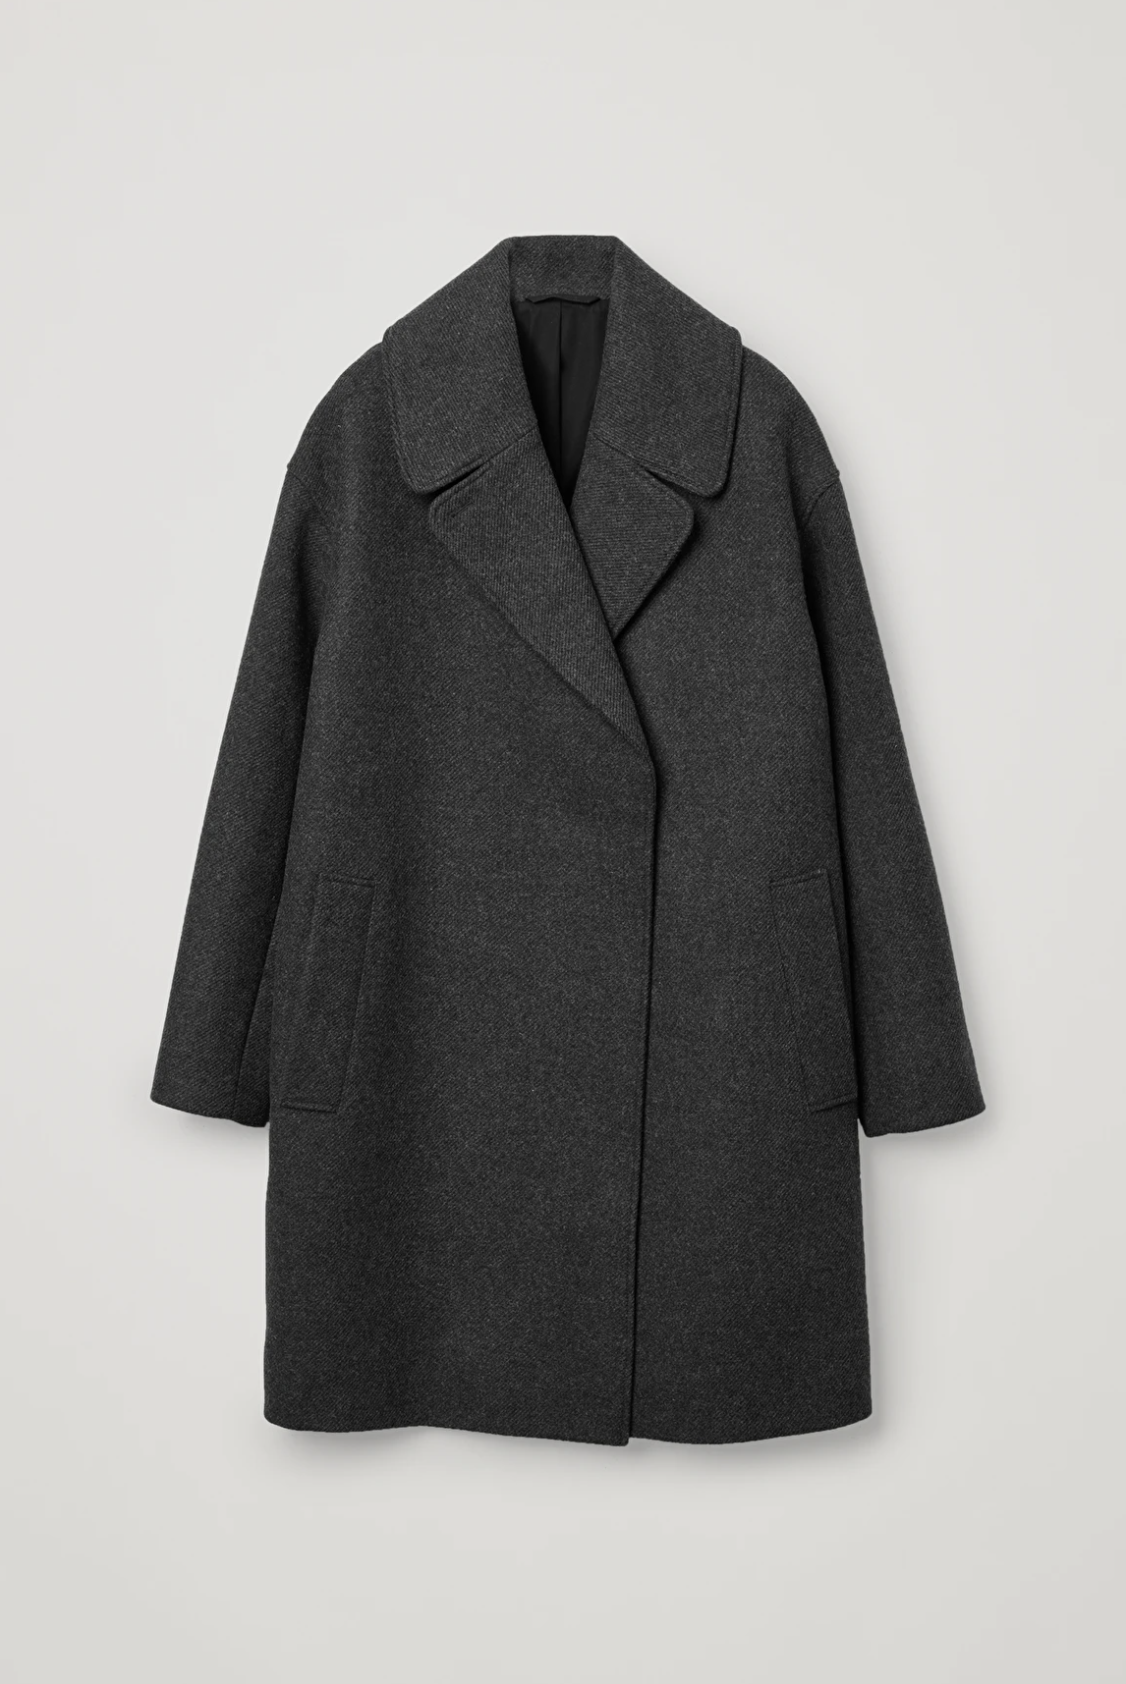 COS Coat $285